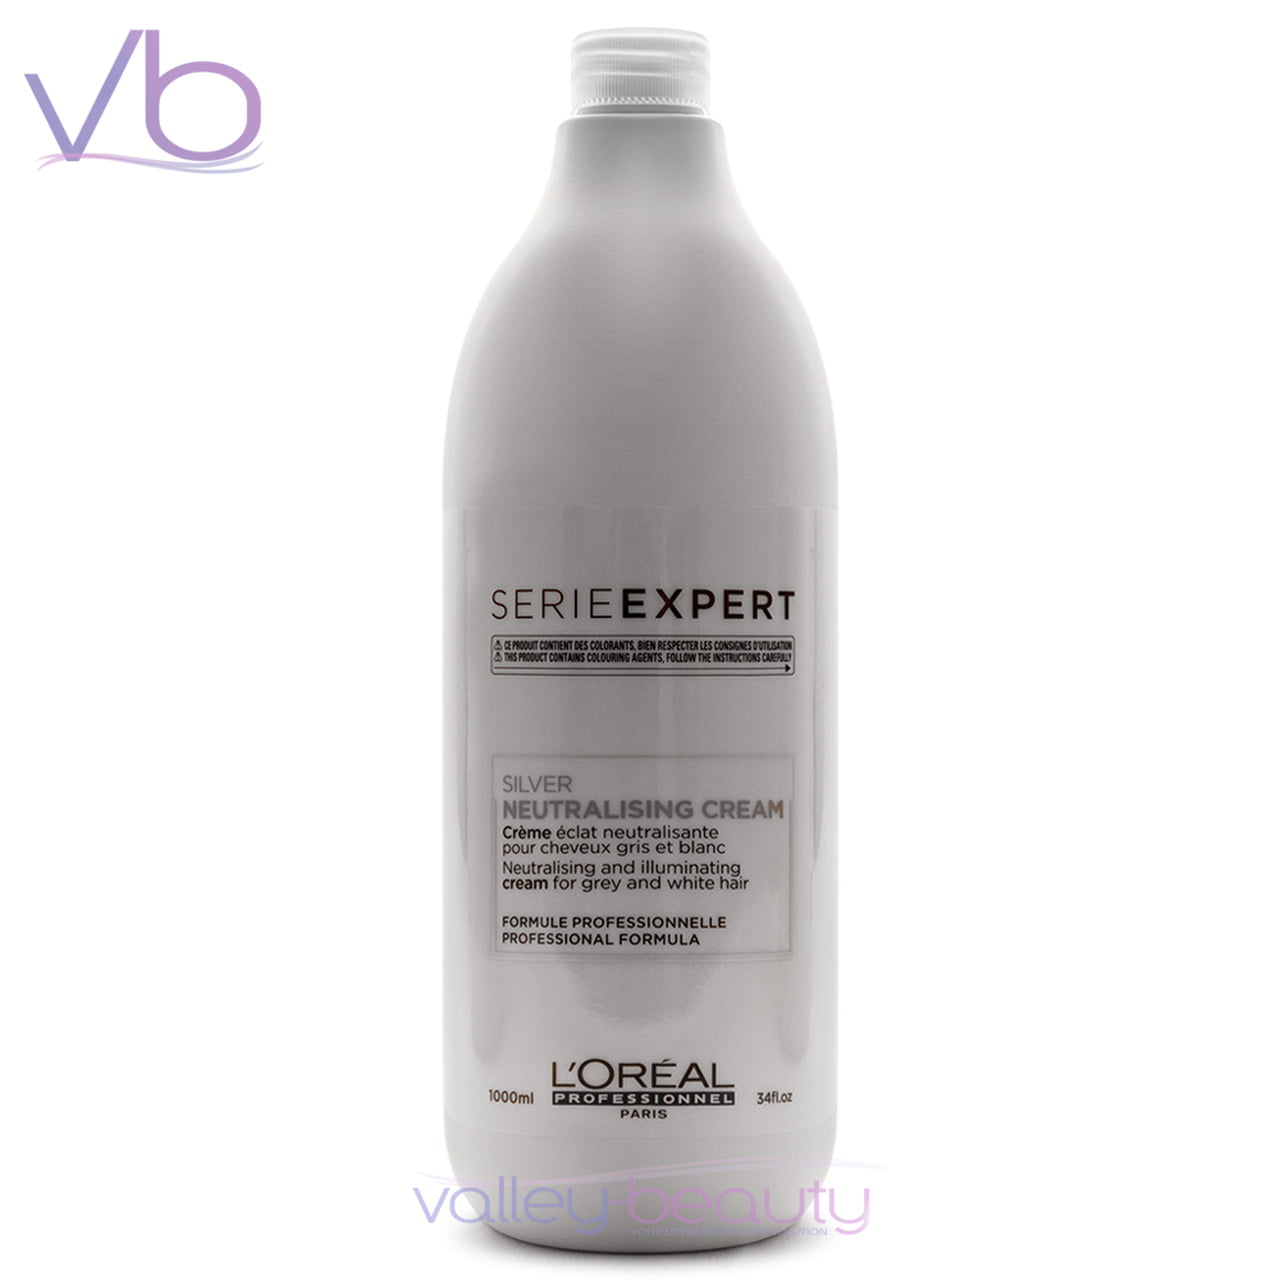 L'Oreal Serie Expert Silver Neutralising Cream, 1000ml Walmart.com